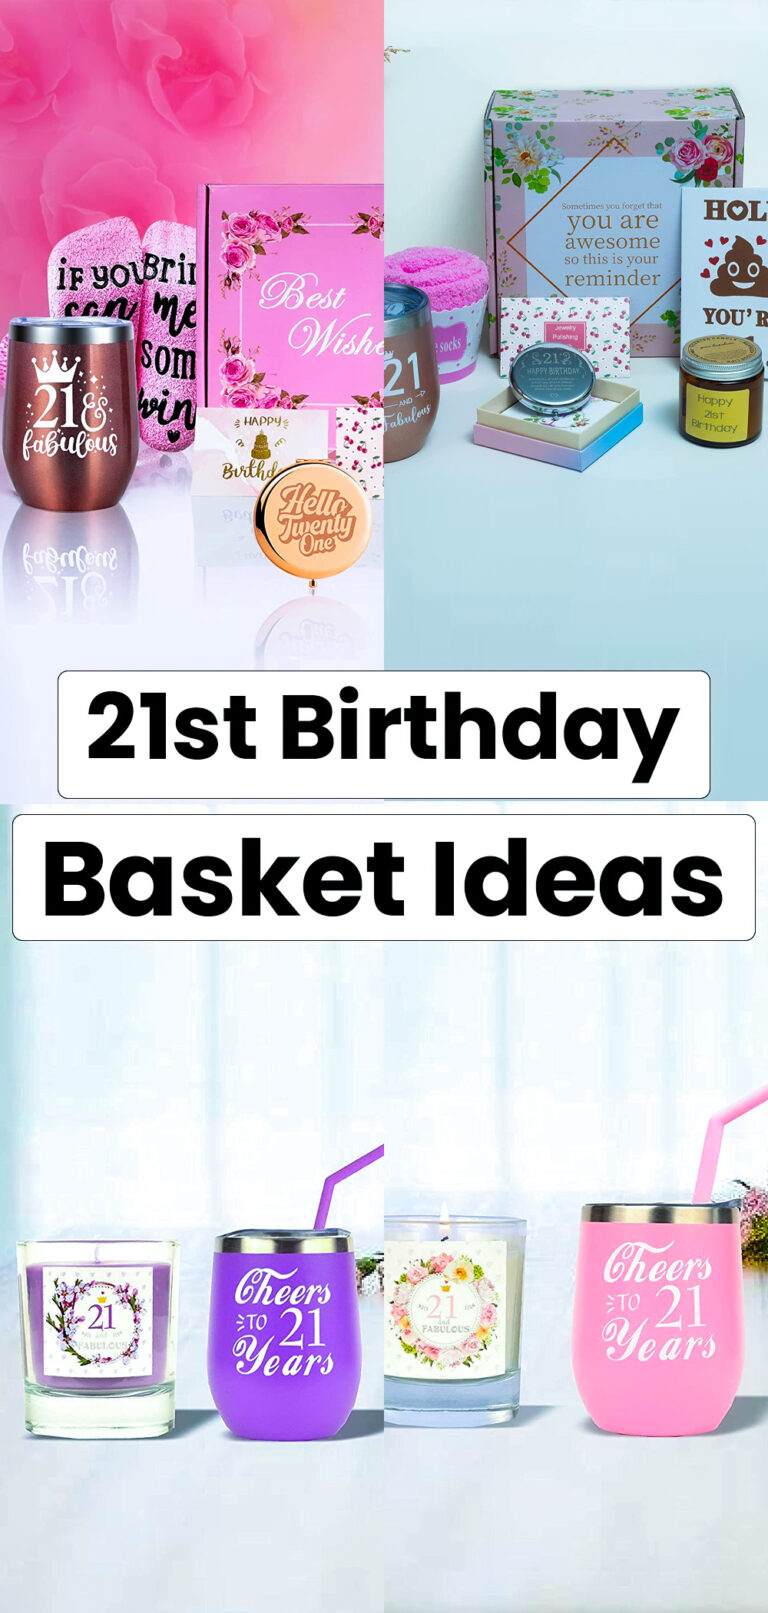 21st Birthday Basket Ideas